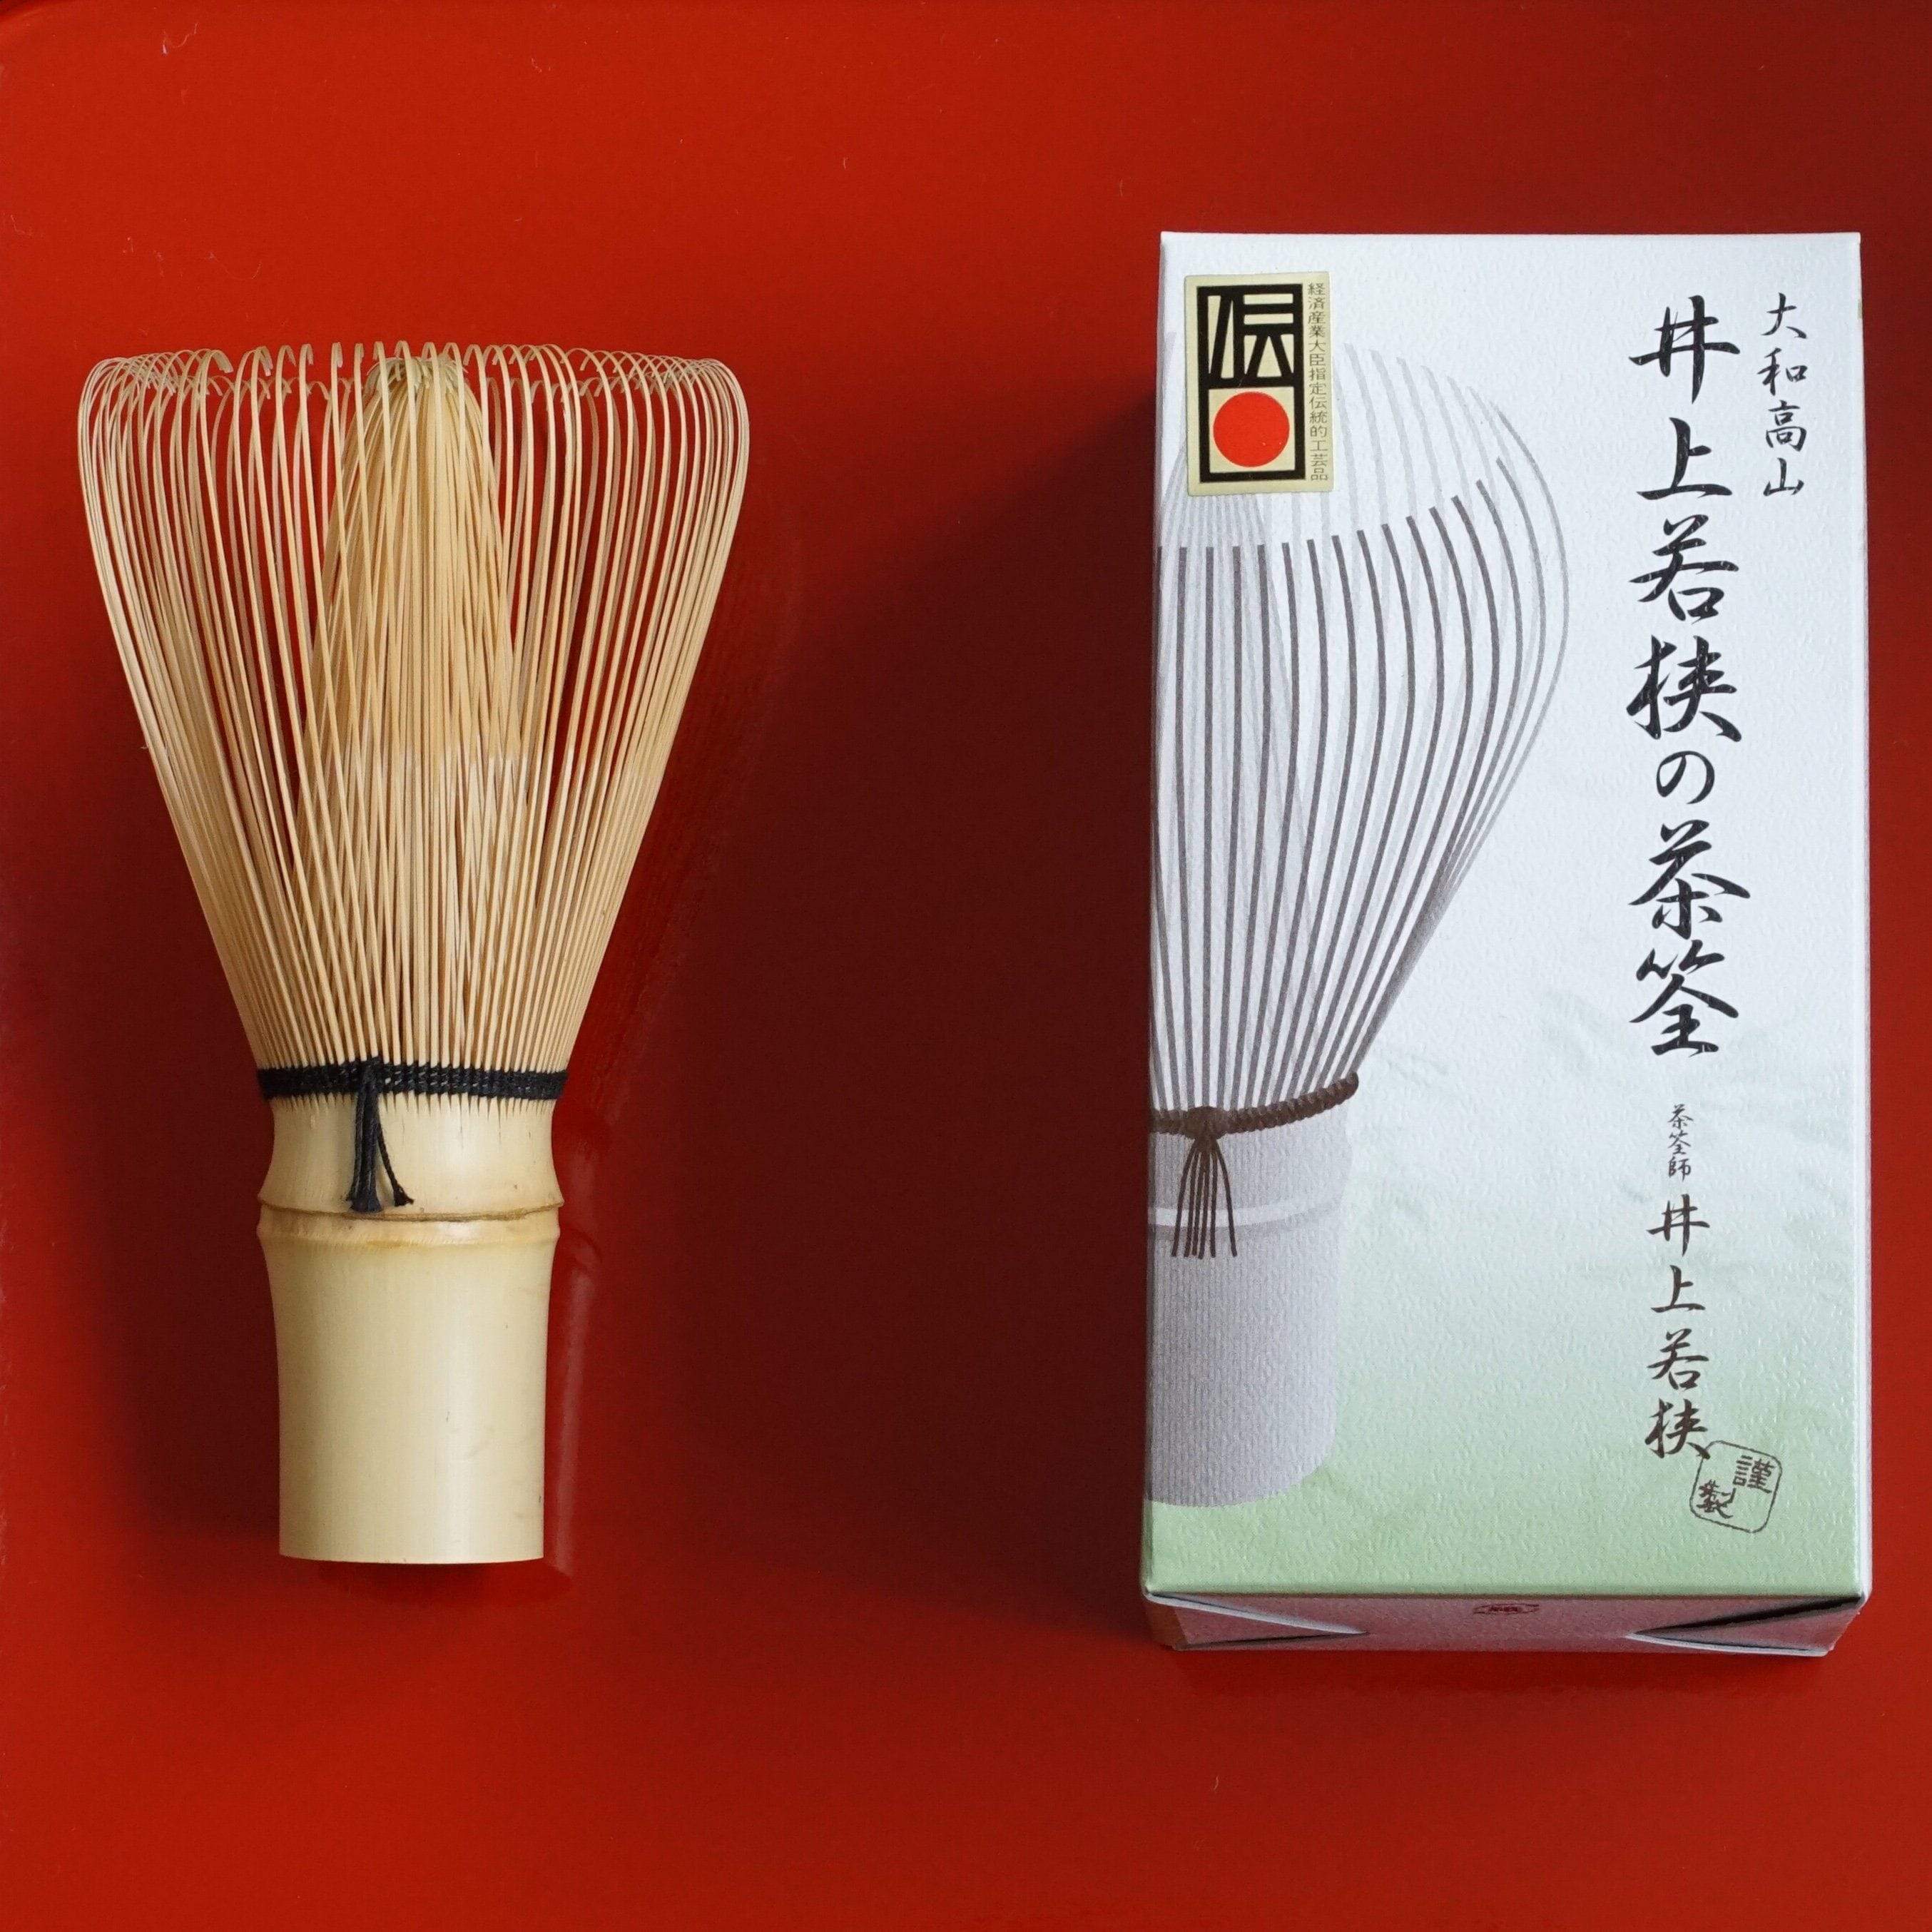 Ocha & Co. Japanese Bamboo Matcha Whisk